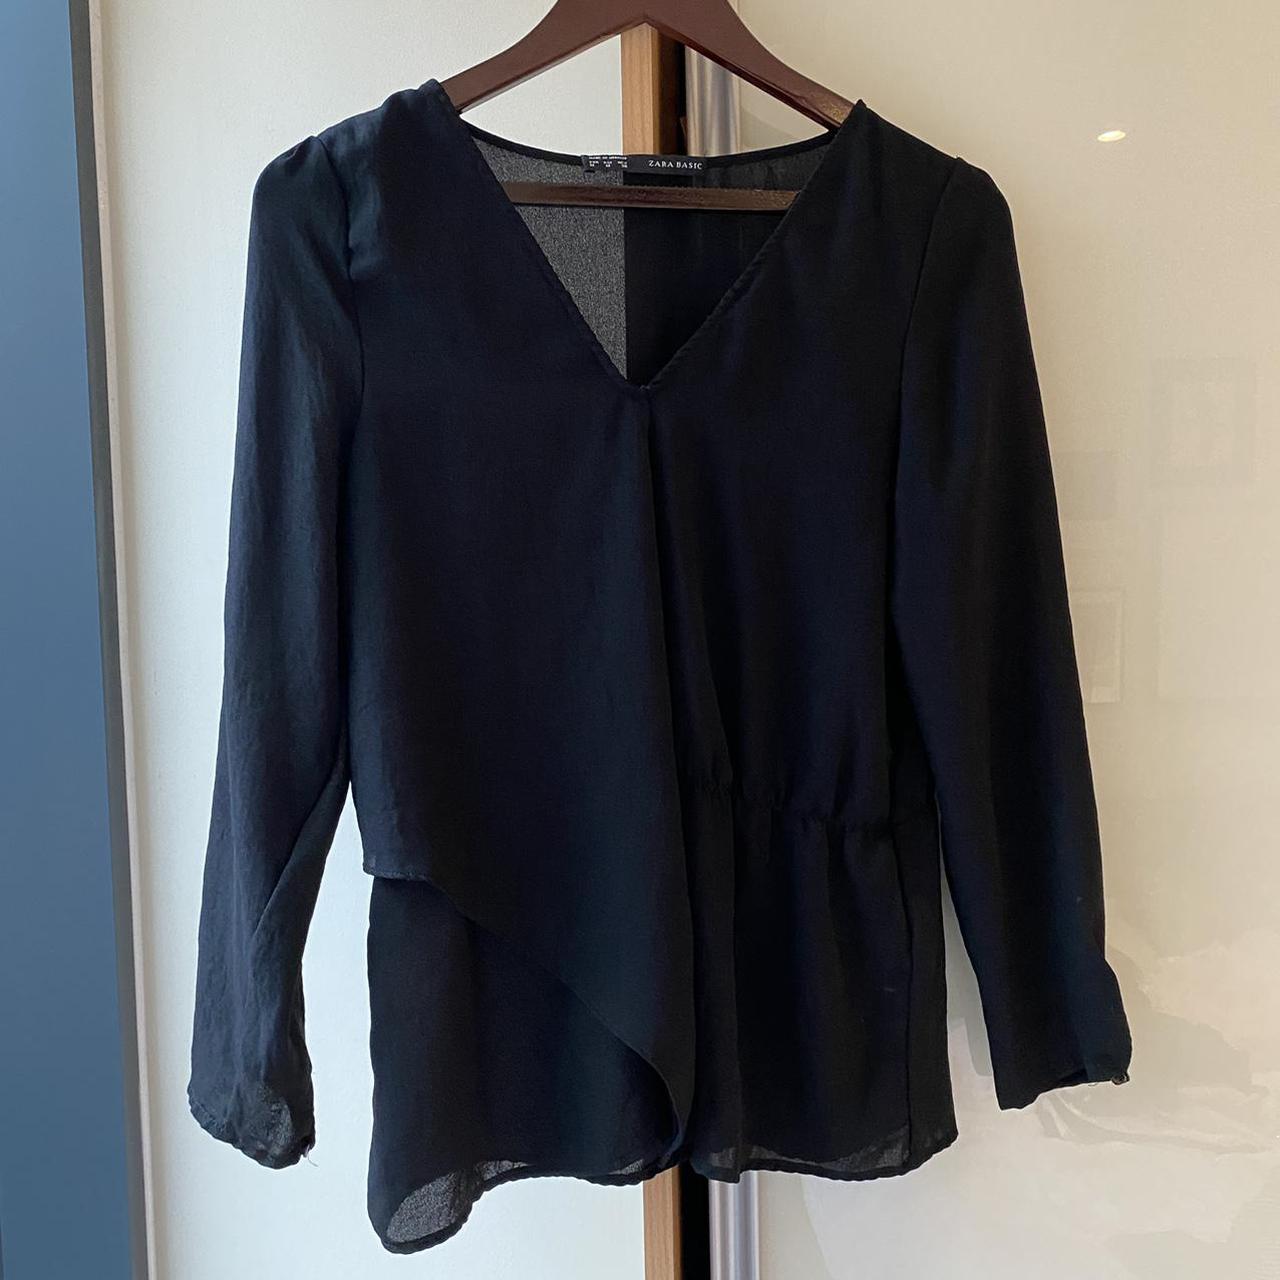 Zara black wide sleeve layered blouse size M (UK... - Depop